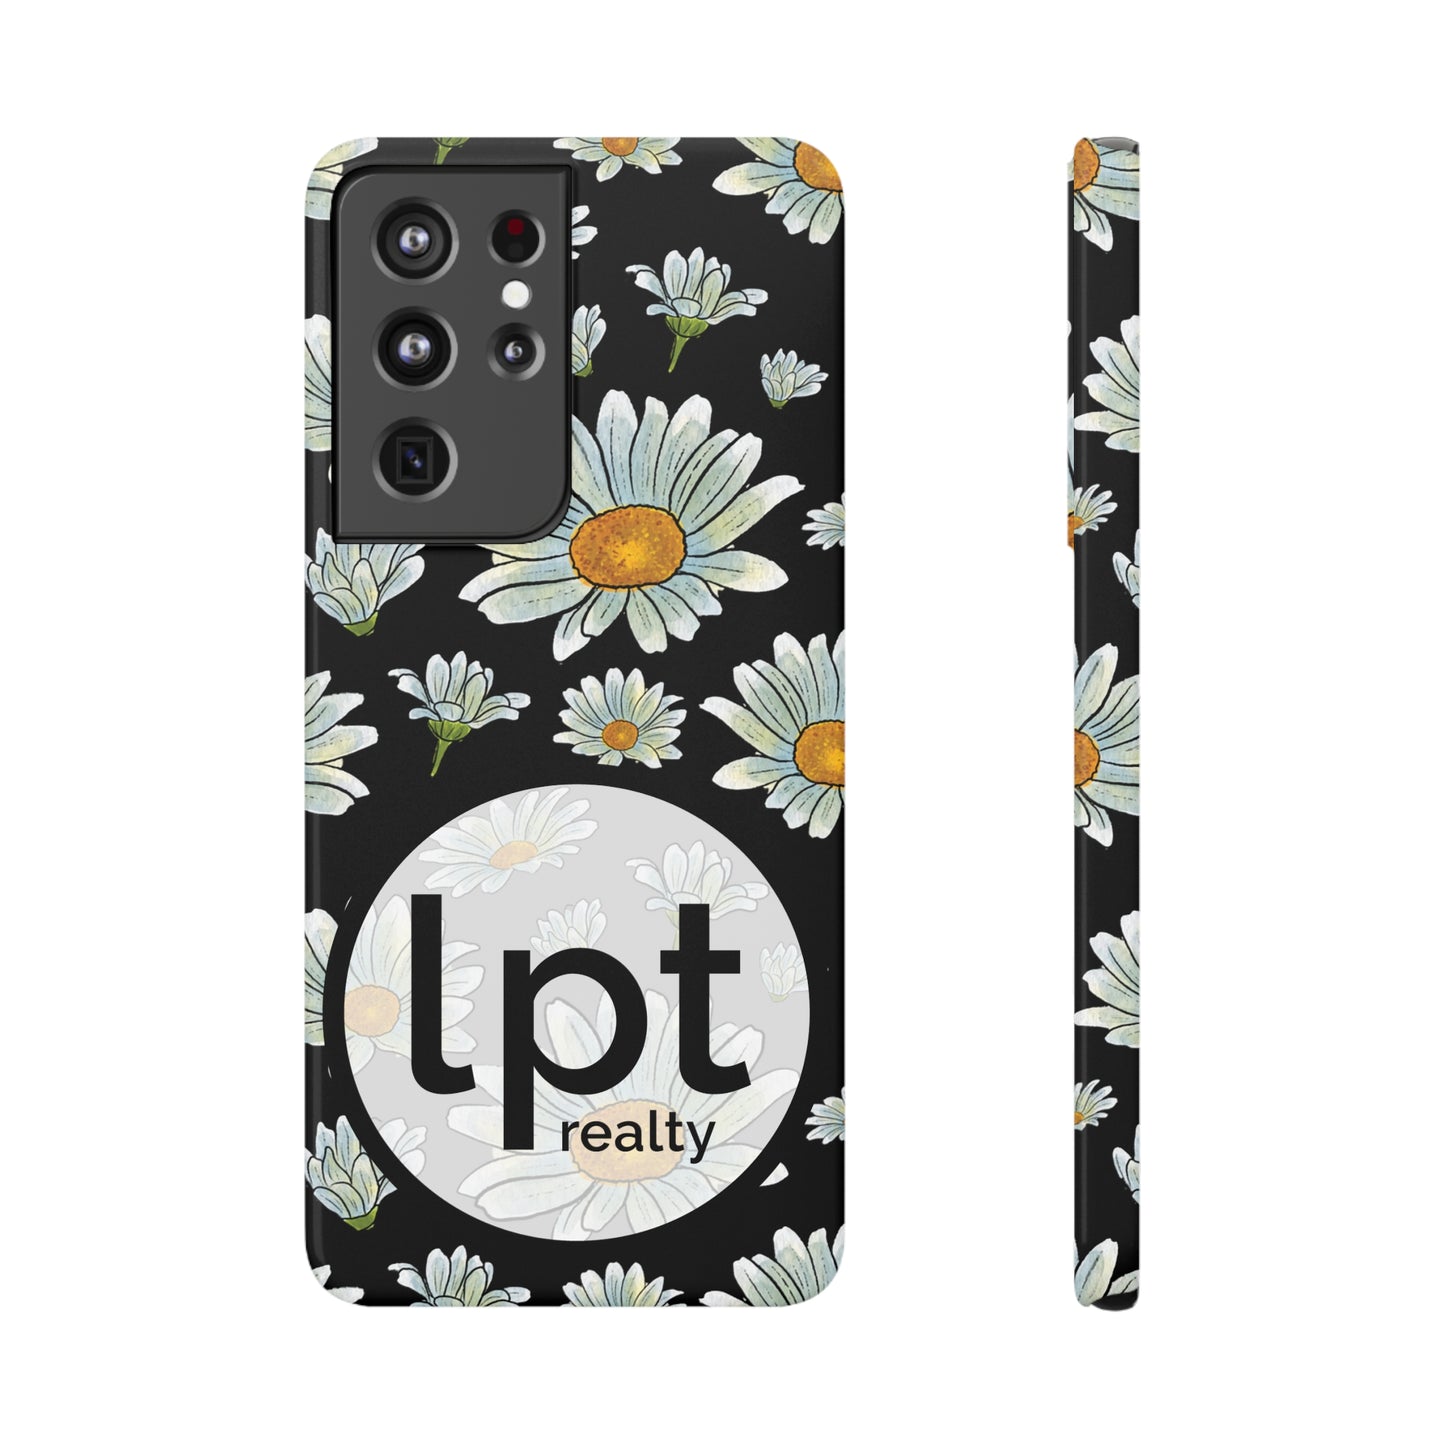 LPT Realty Logo - Large Watercolor Daisies Samsung Slim Cases